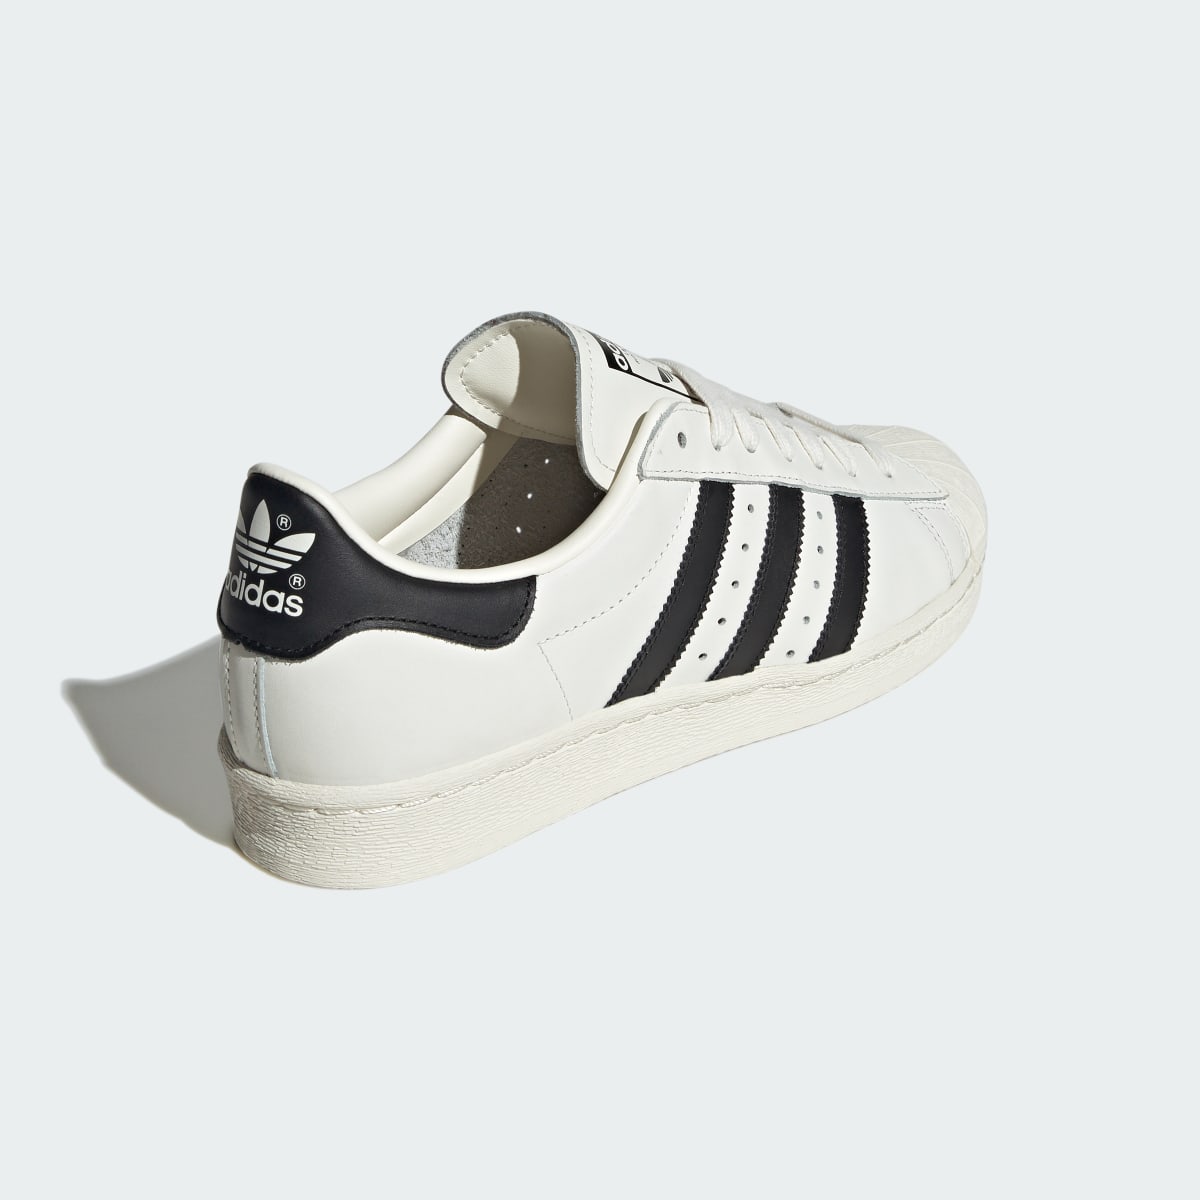 Adidas Superstar 82 Shoes. 6